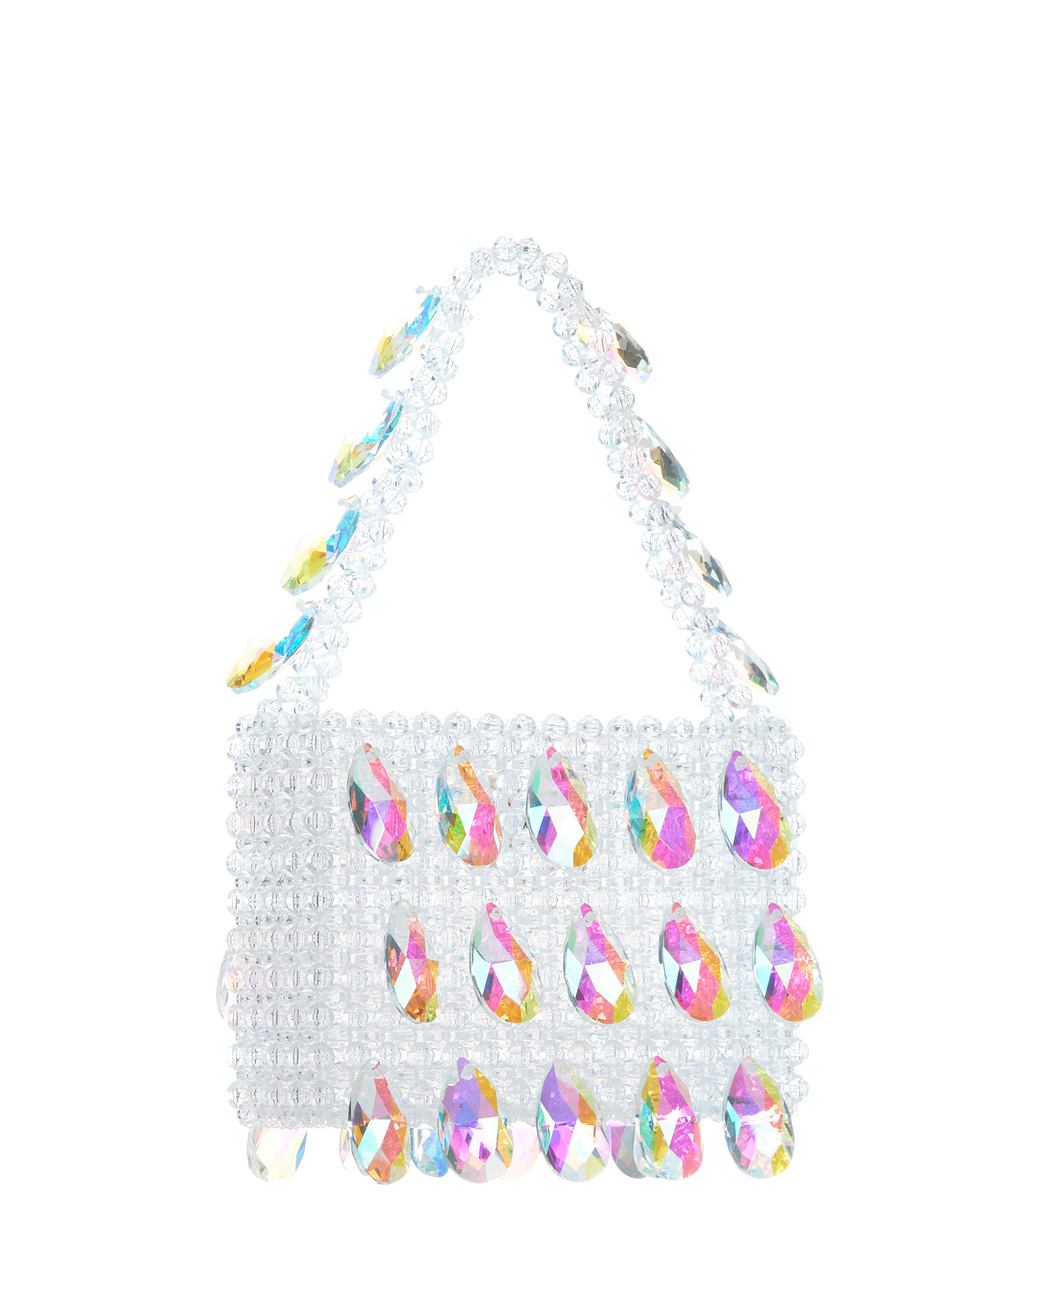 Mini Crystal Bag